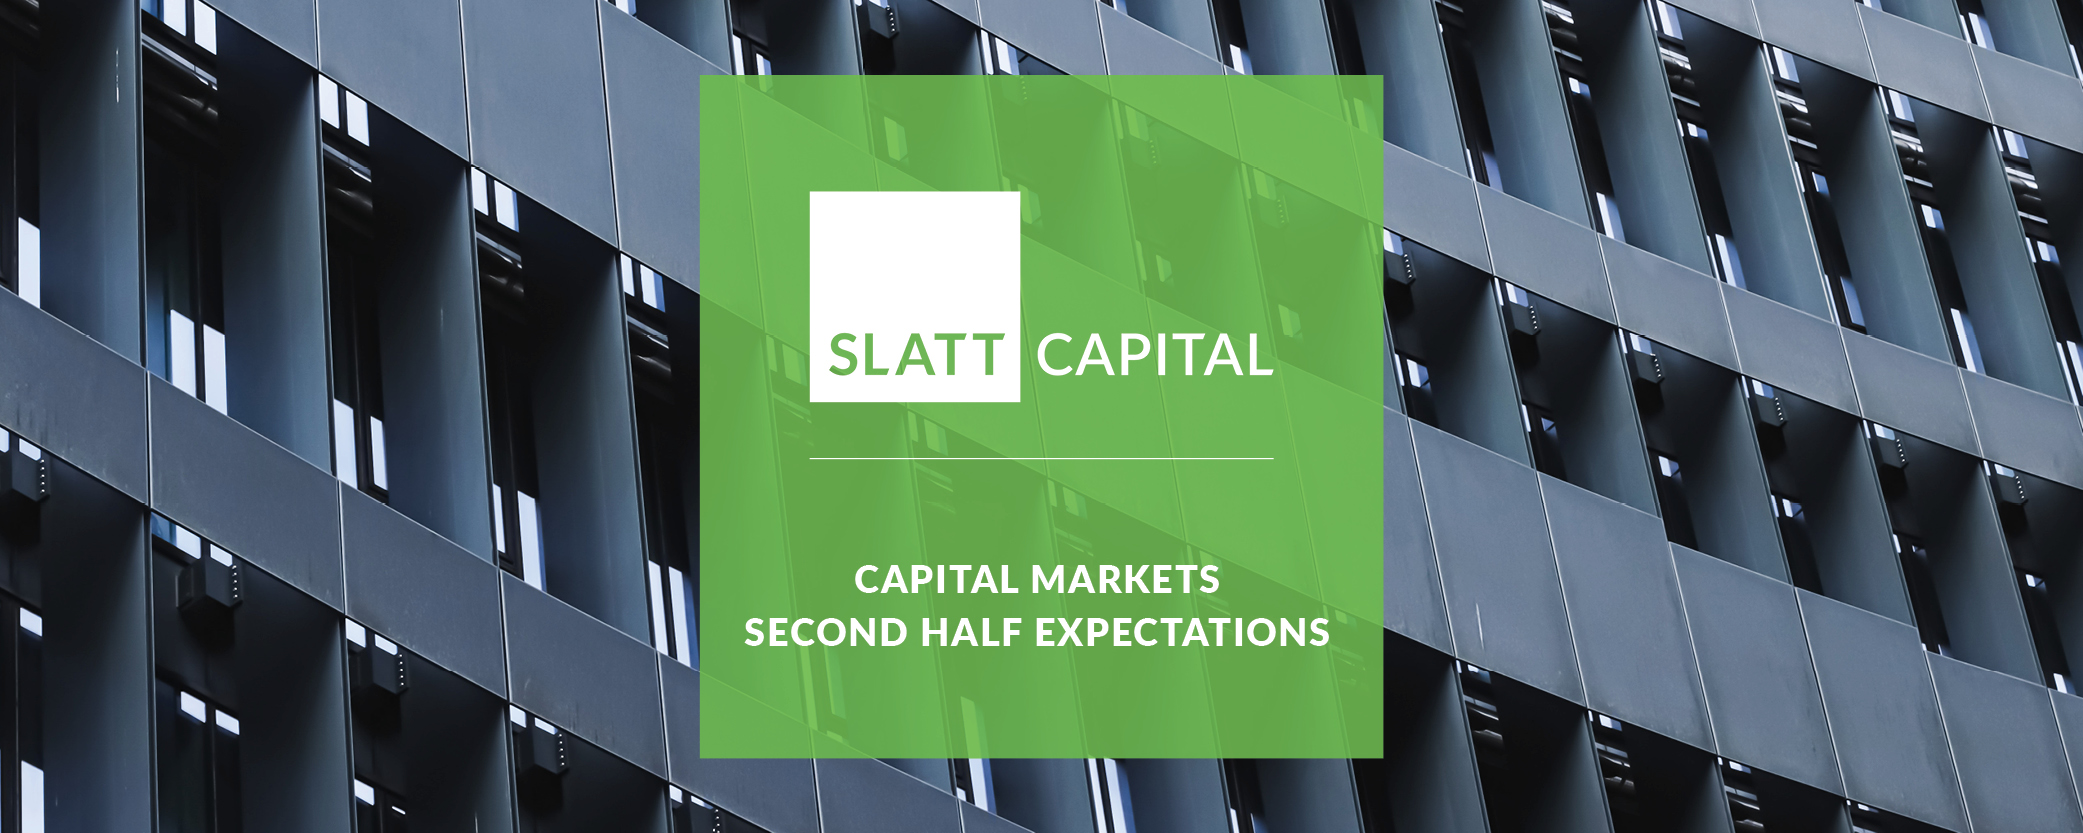 Capital markets second half expectations